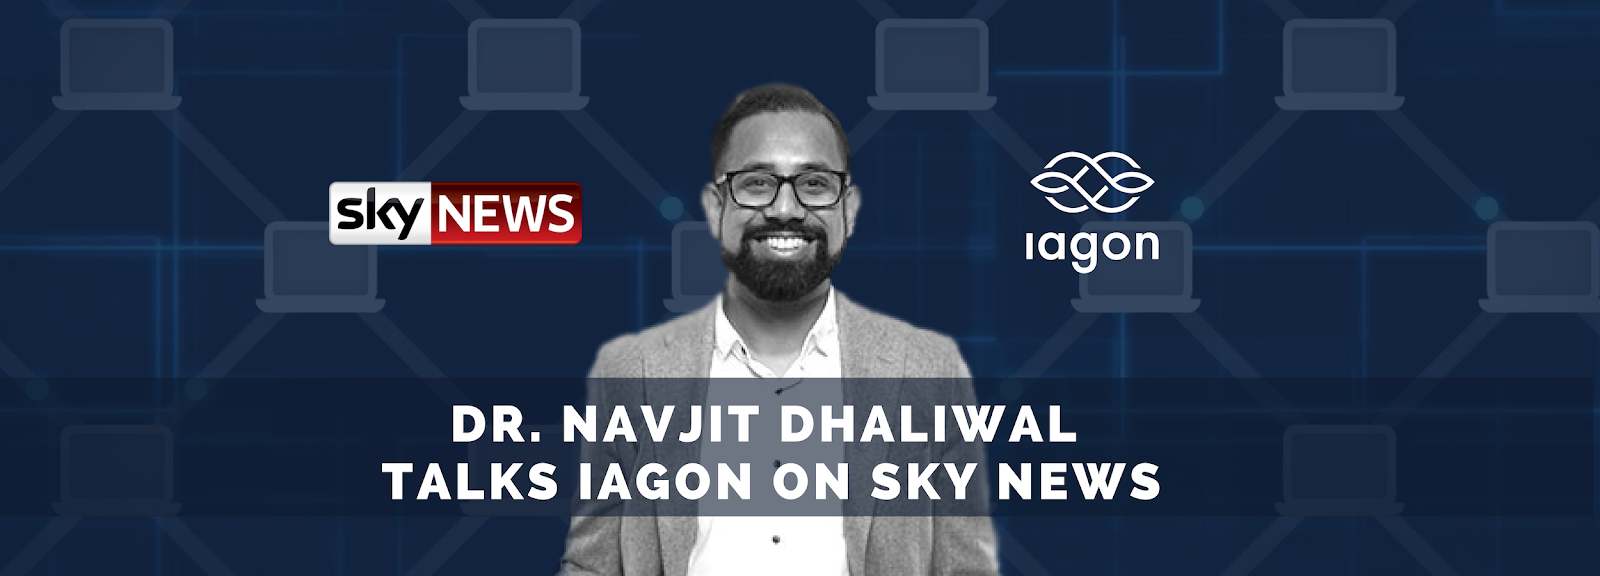 Dr. Navjit Dhaliwal Talks IAGON on Sky News